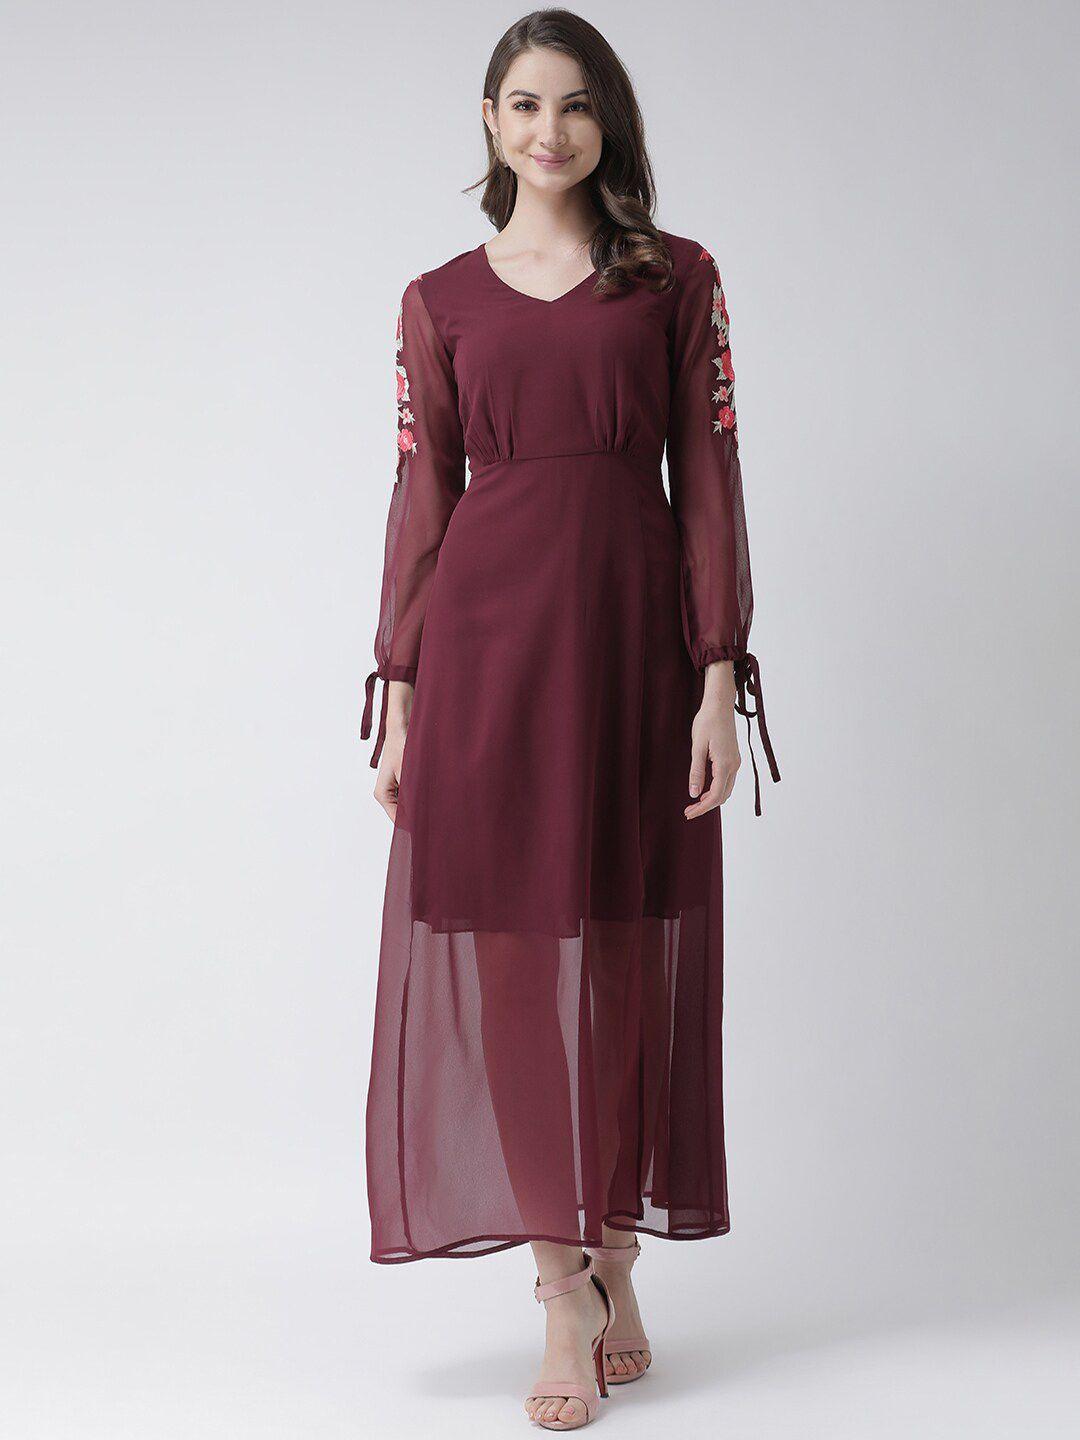 kassually women burgundy solid maxi dress